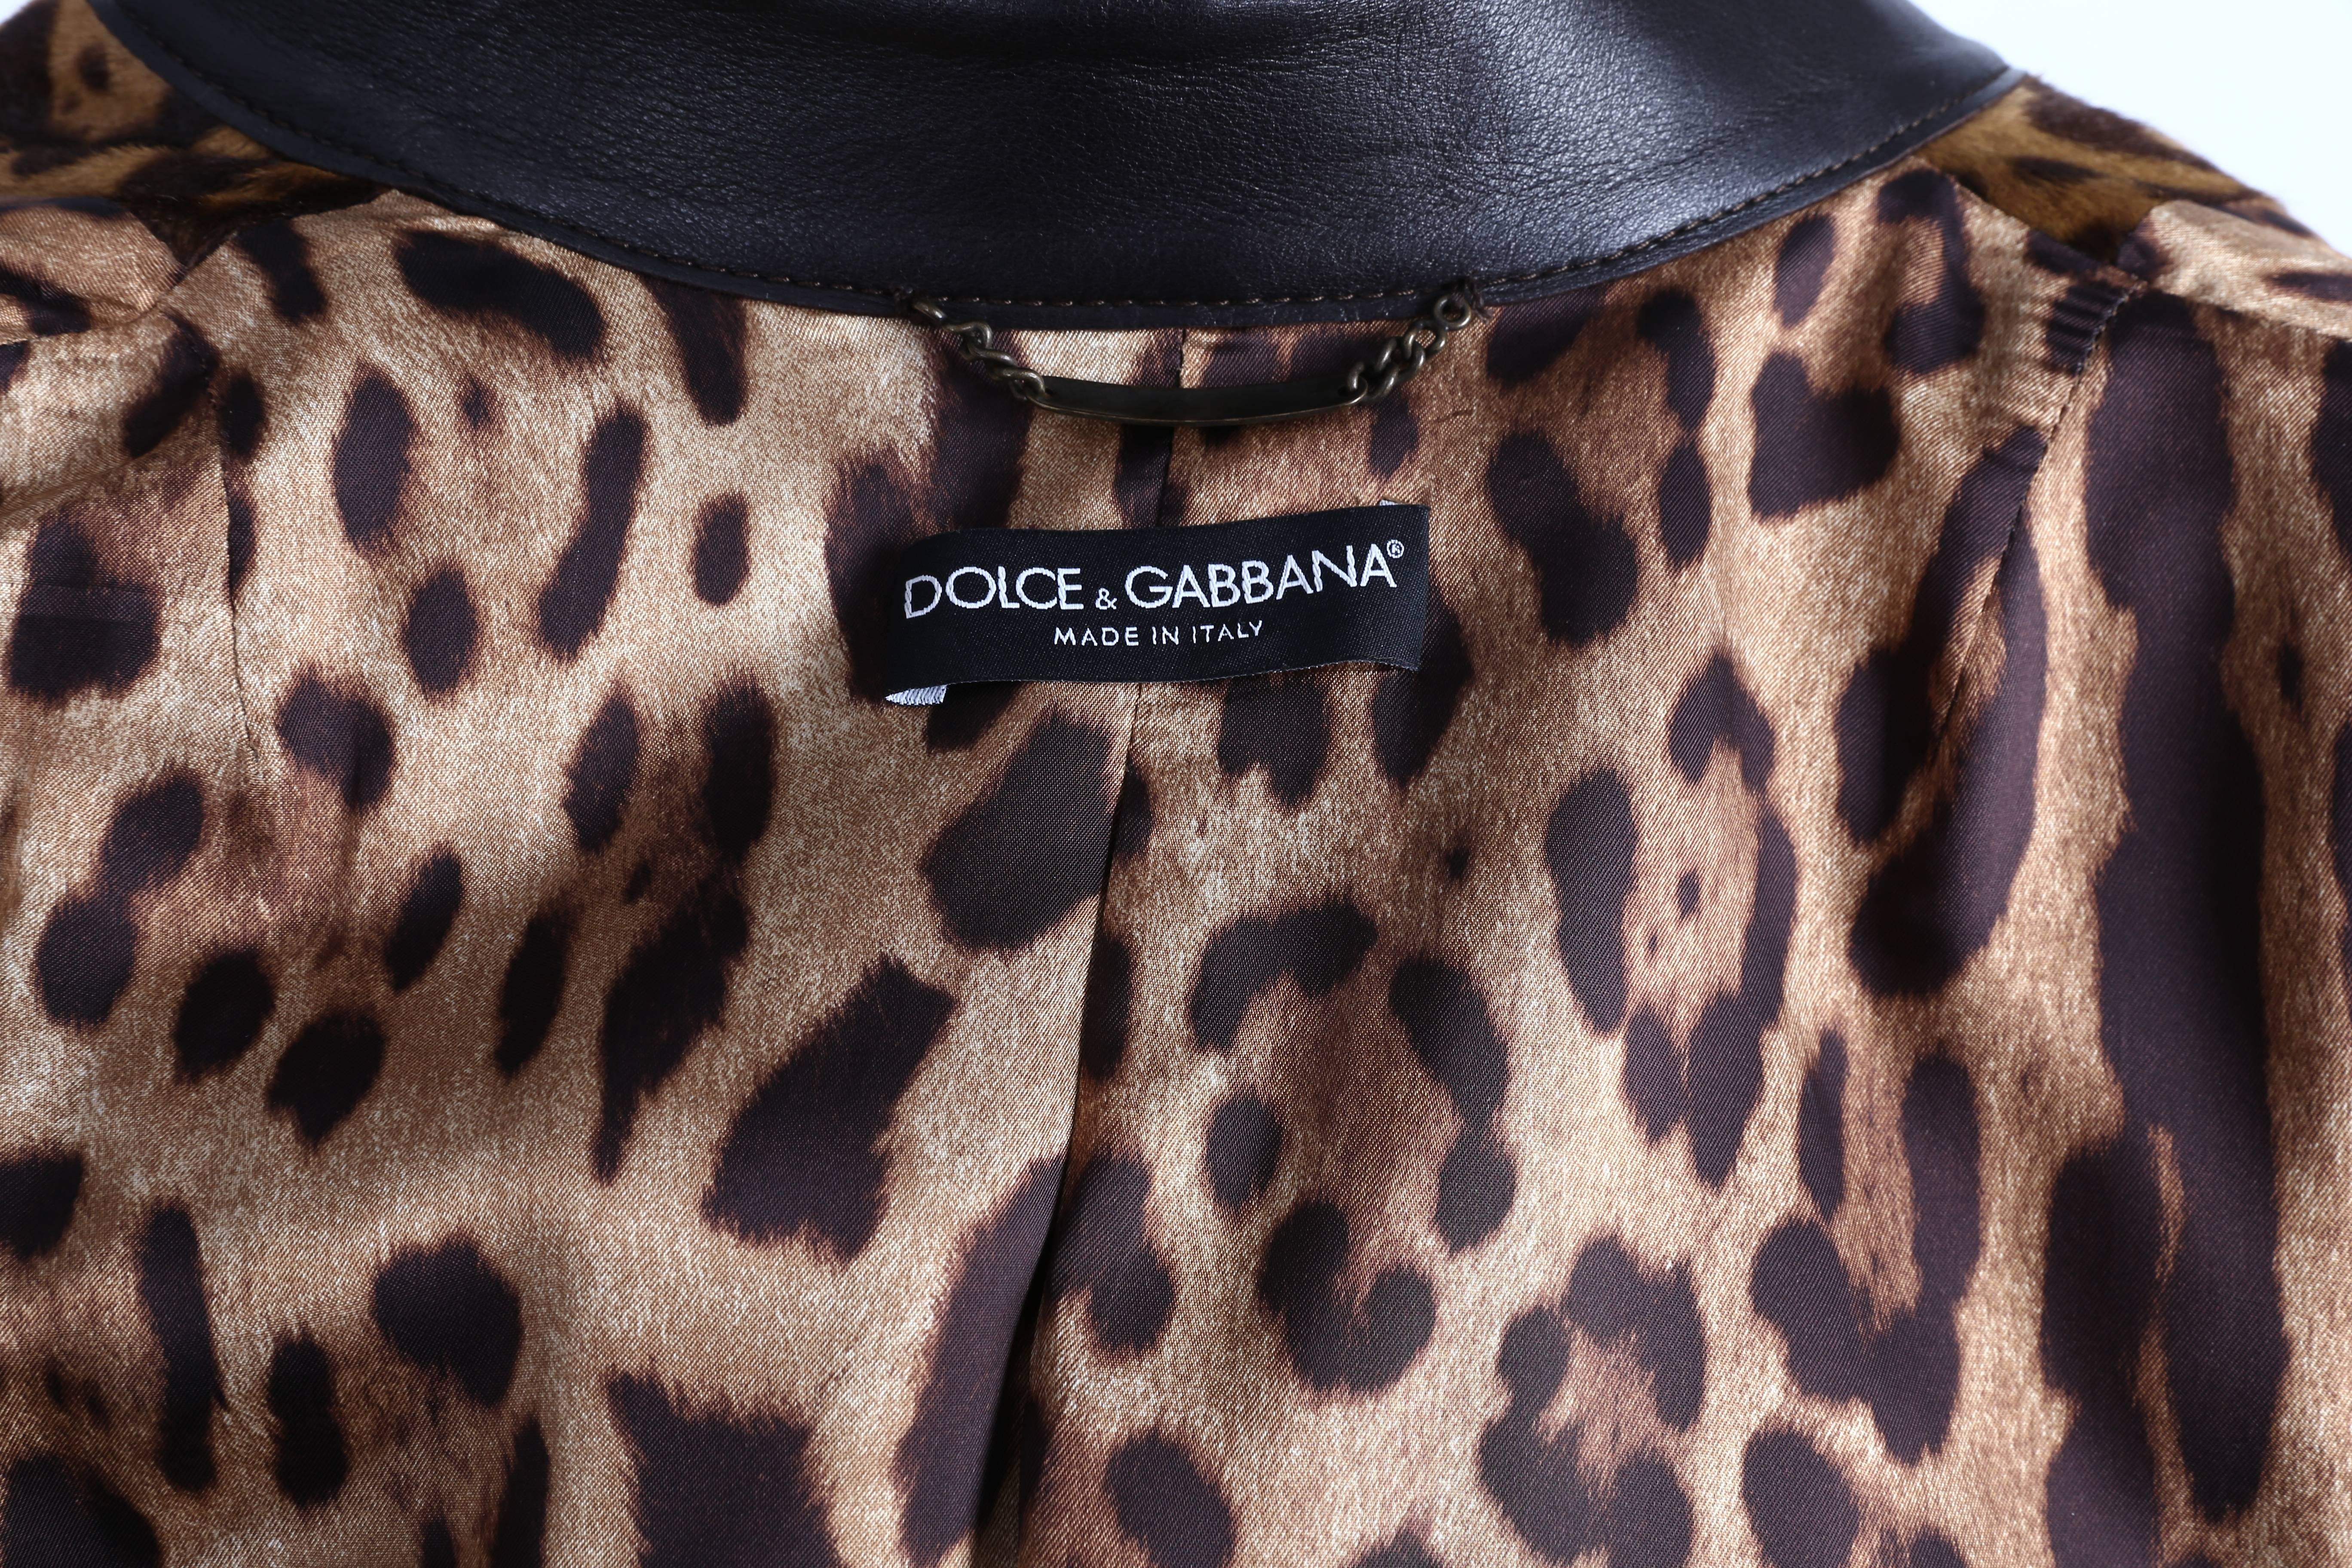 Dolce & Gabbana Leopard Print Pony skin Coat - Size 40 1